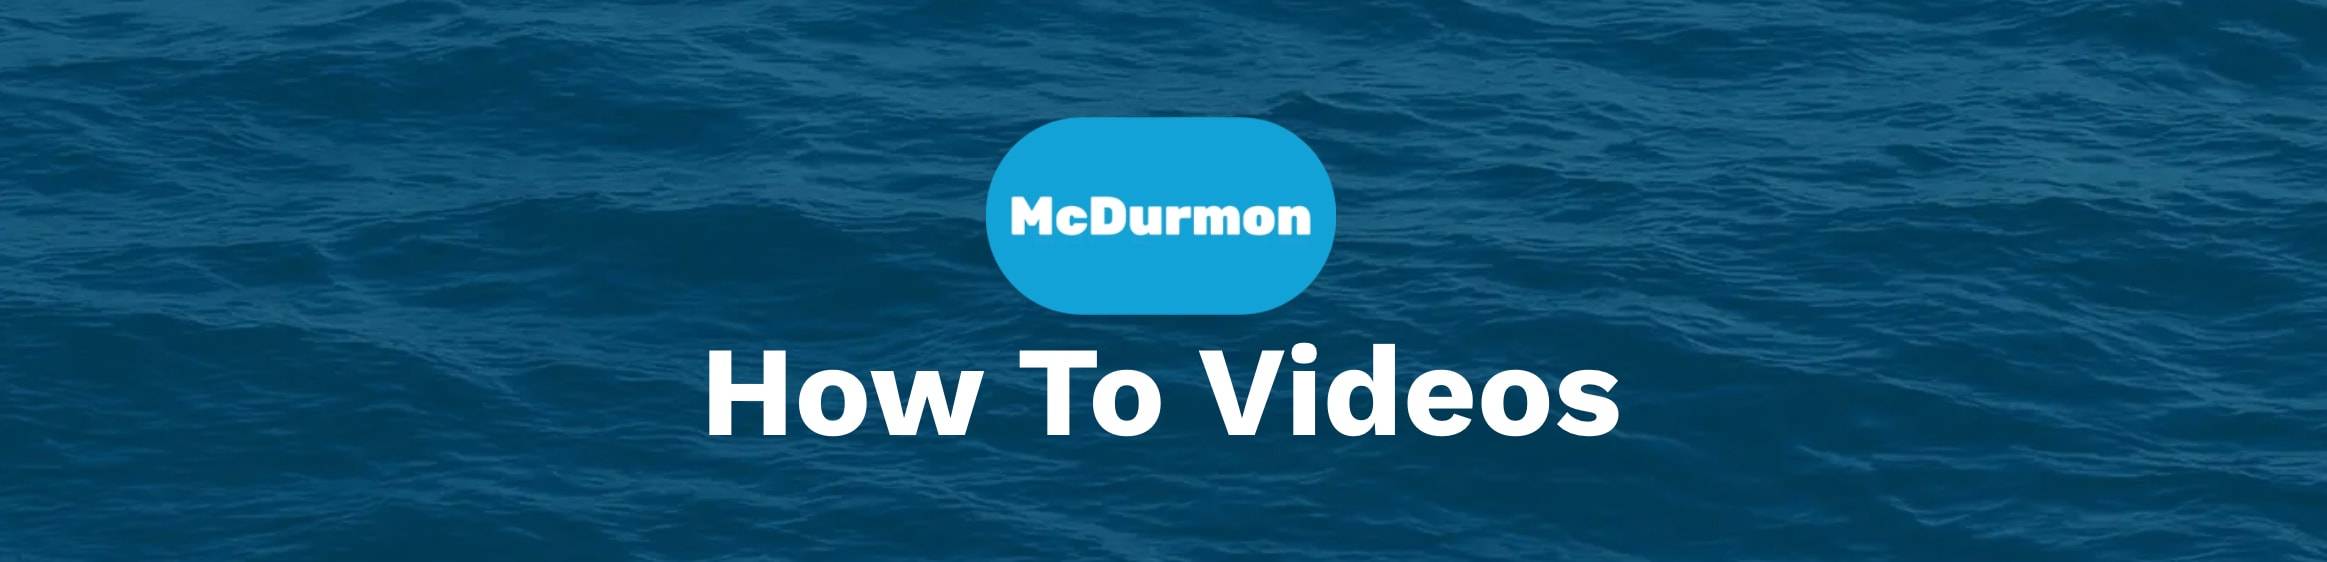 Mcdurmon How to videos